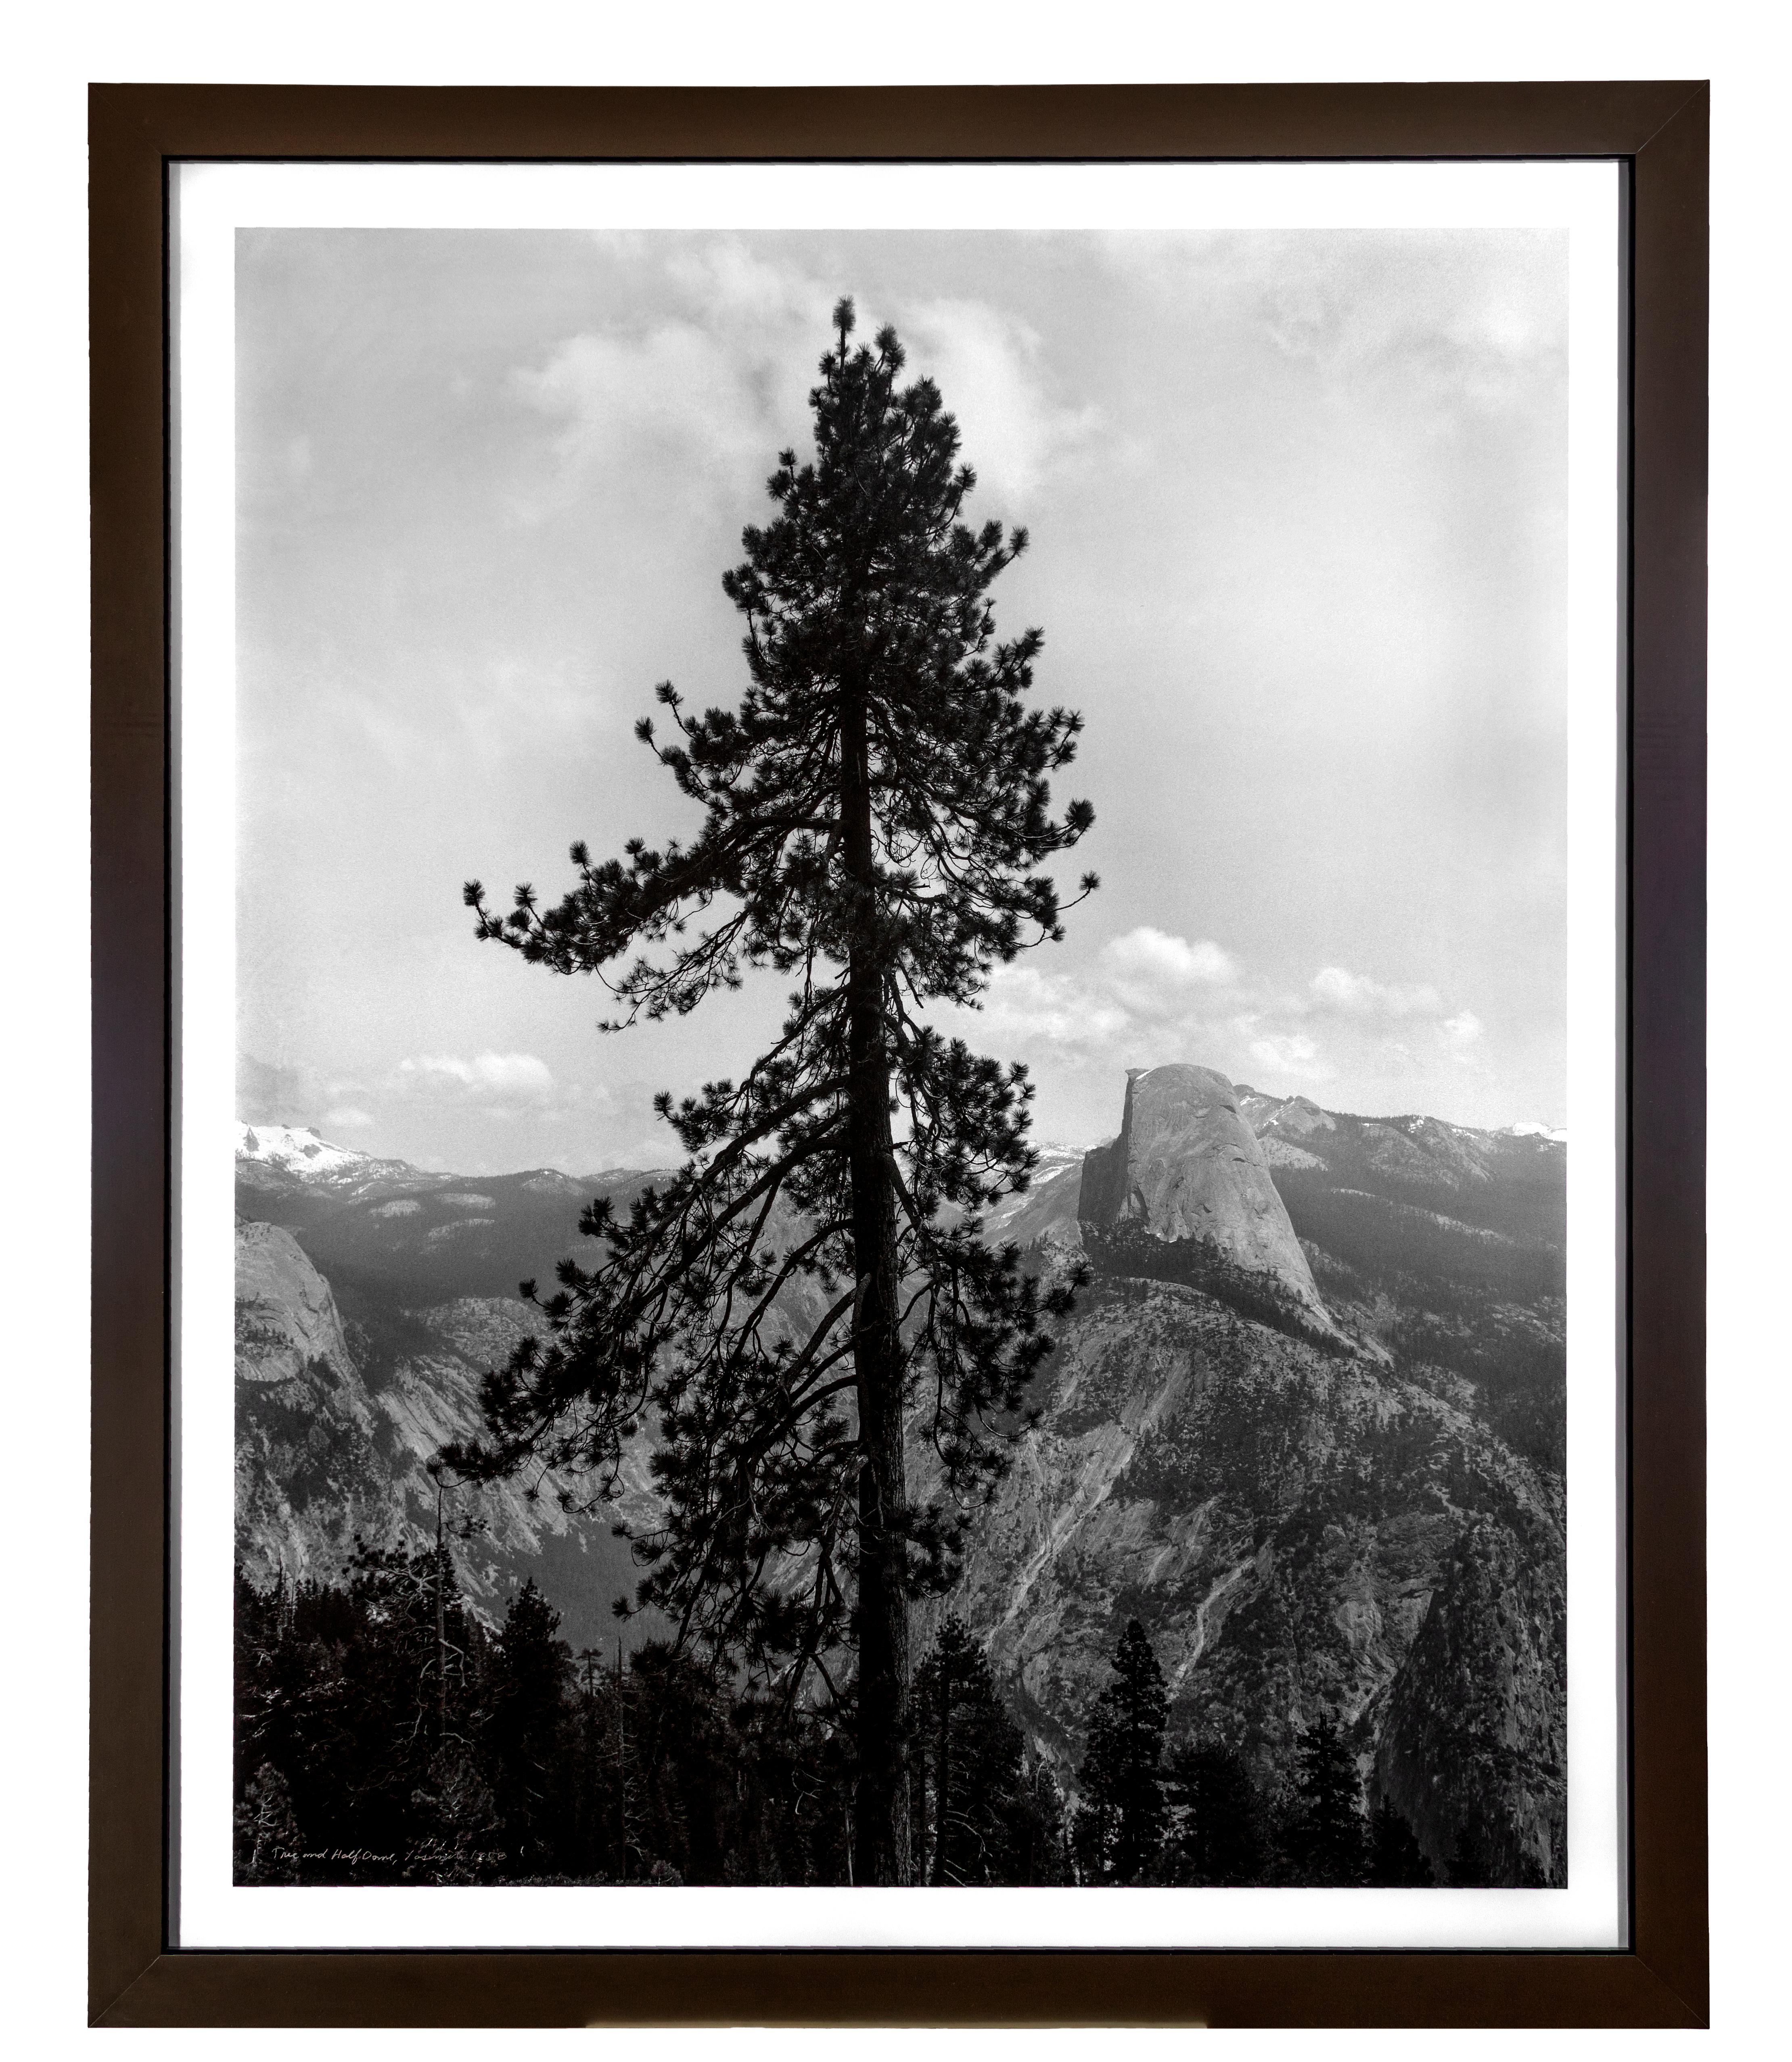 Thomas Ferderbar Landscape Photograph - "Tree & Half Dome (Yosemite National Park, CA)" Photograph signed by T Ferderbar